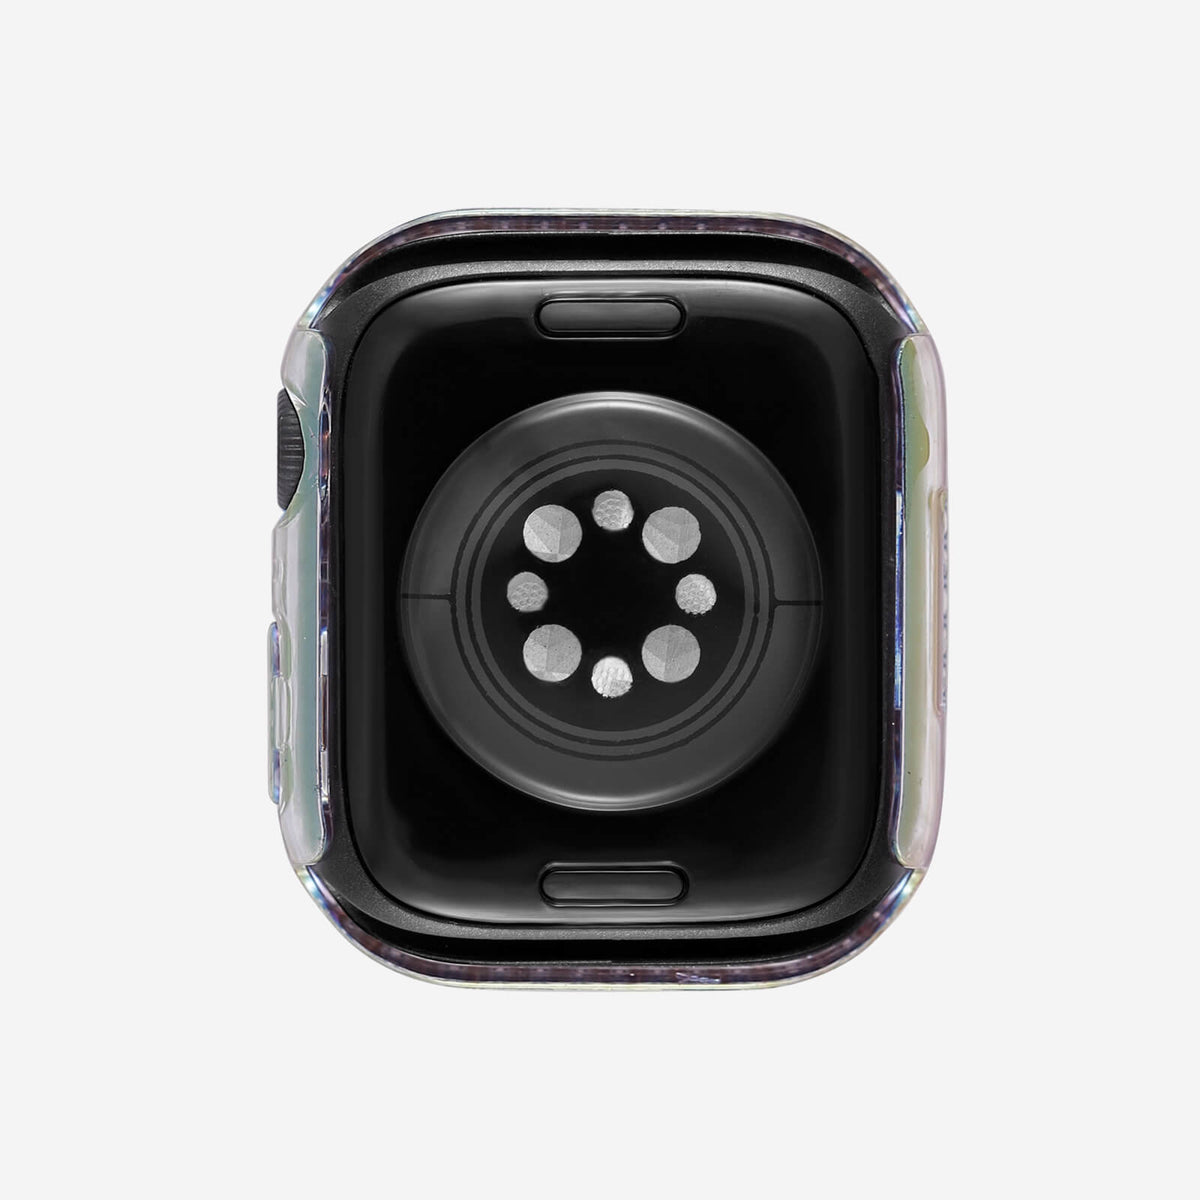 Apple Watch Double Halo Crystal Bumper Case - Black Pearl